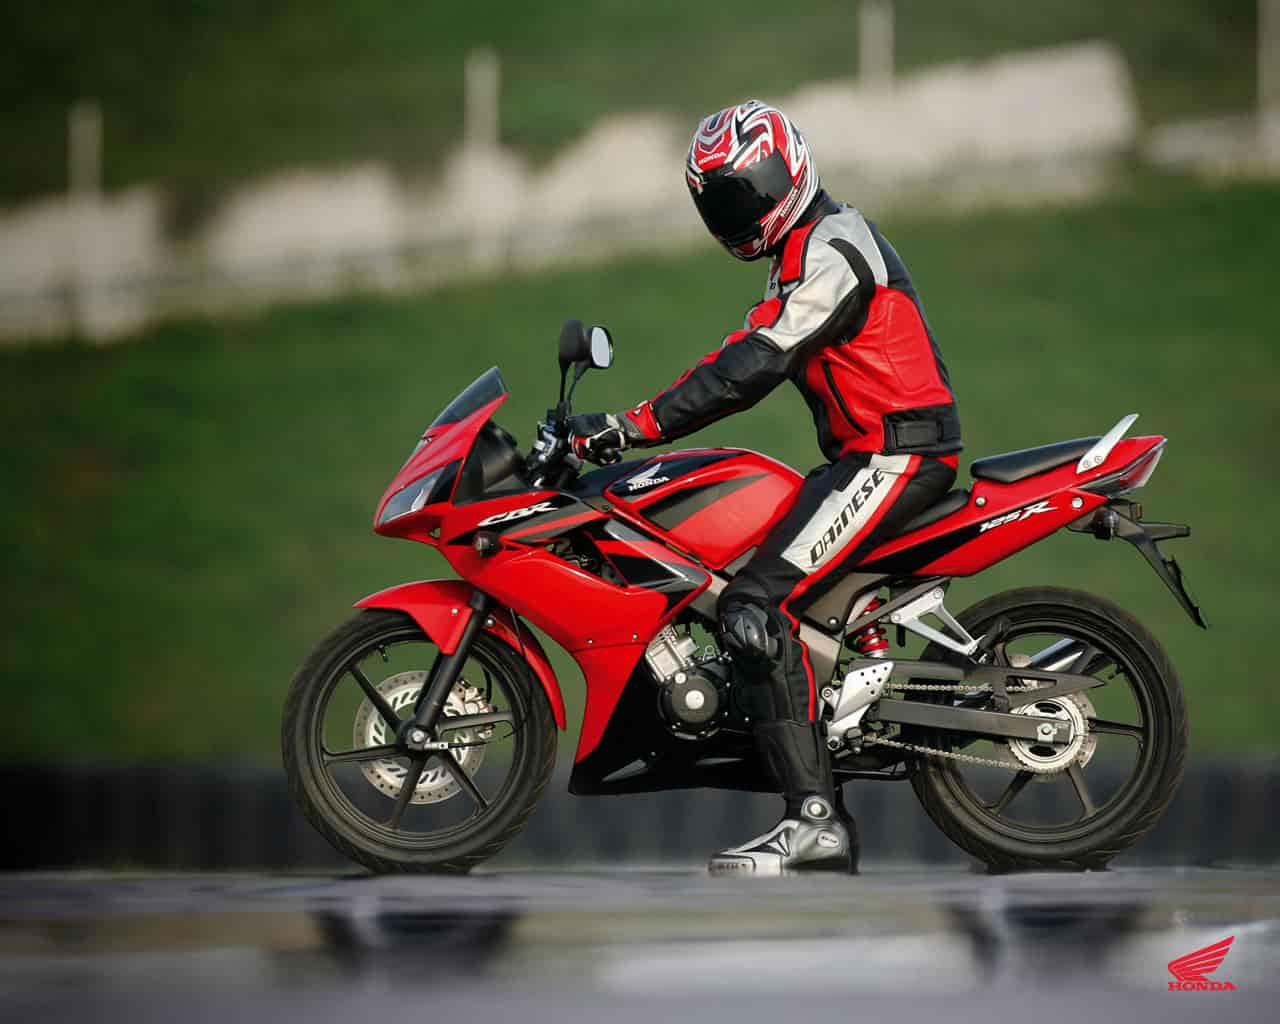 Мотоцикл focus 125 (2006): технические характеристики, фото, видео